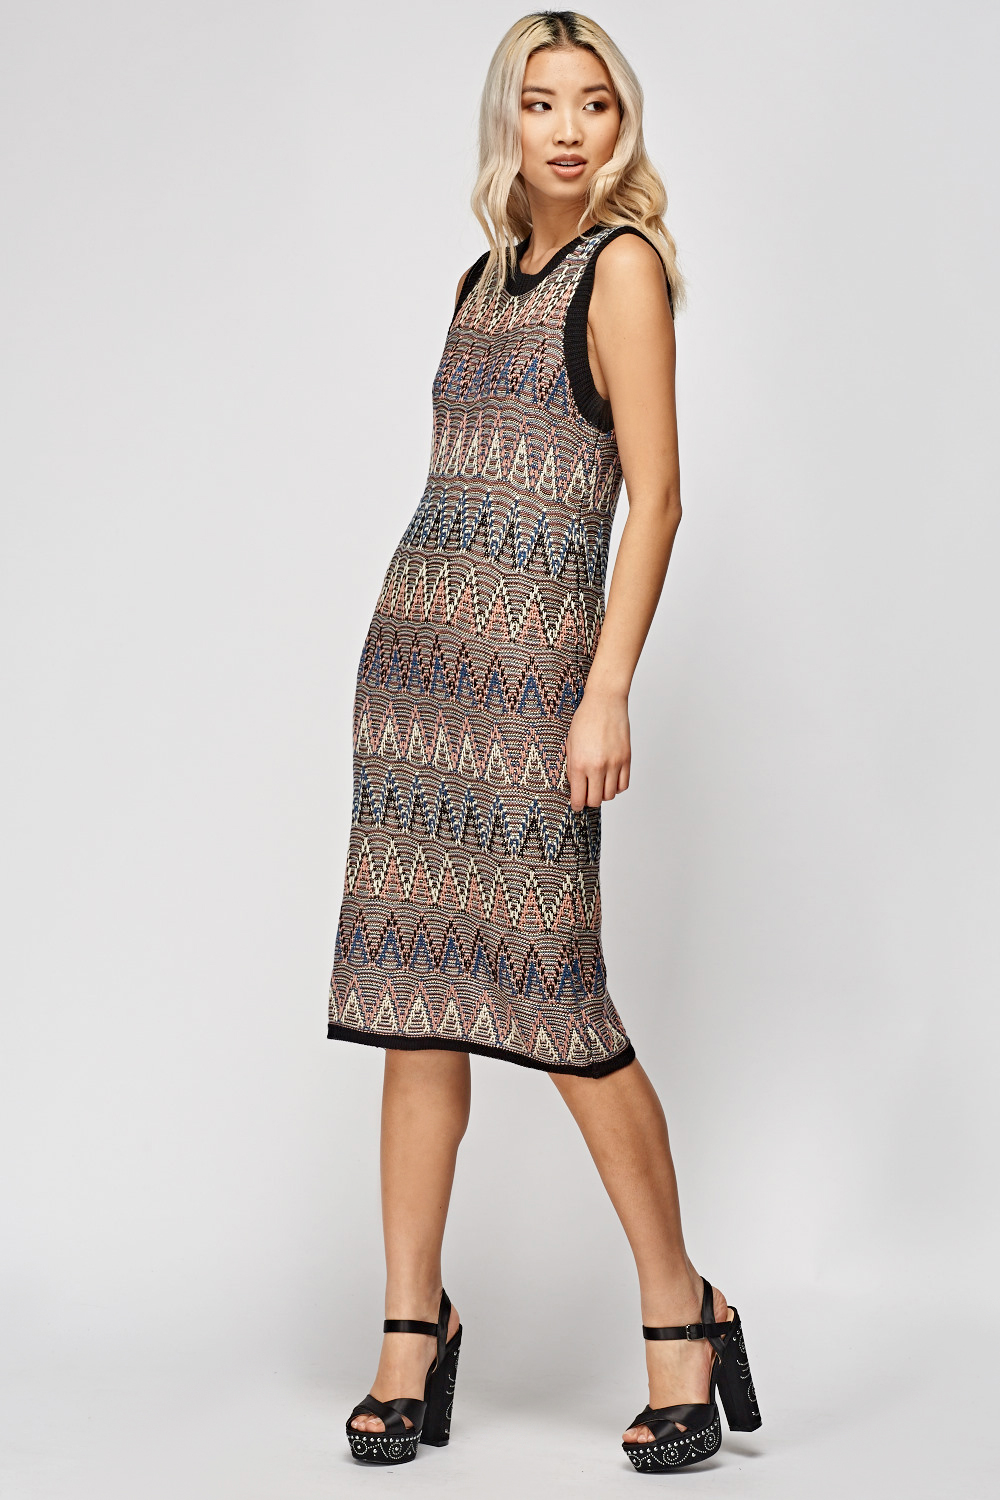 Sleeveless Knitted Dress - Just $6